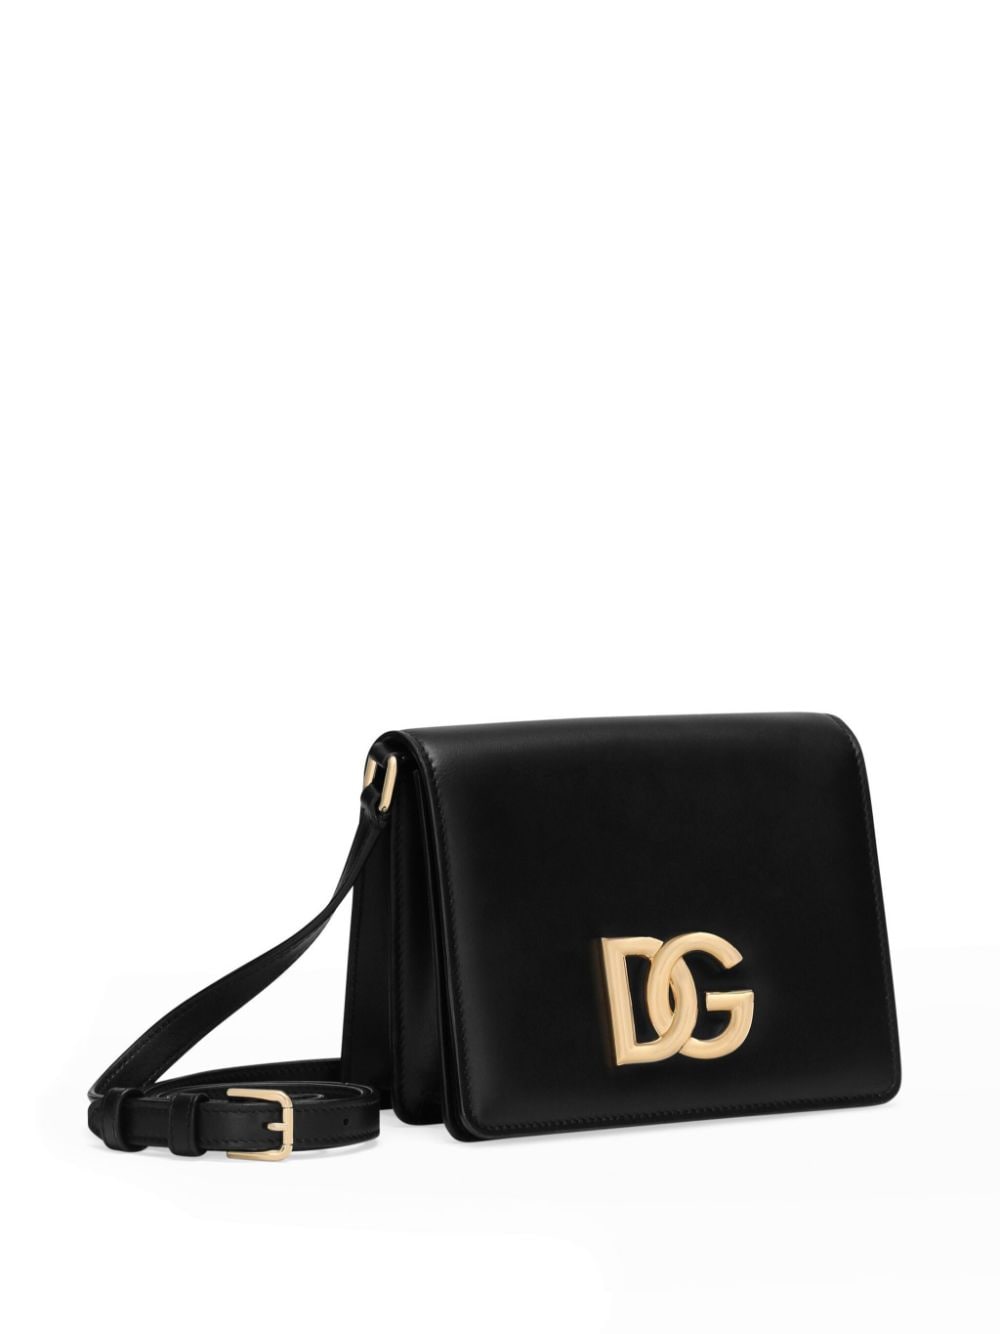 DOLCE & GABBANA Black Calfskin 3.5 Crossbody Bag with Gold-Tone DG Logo